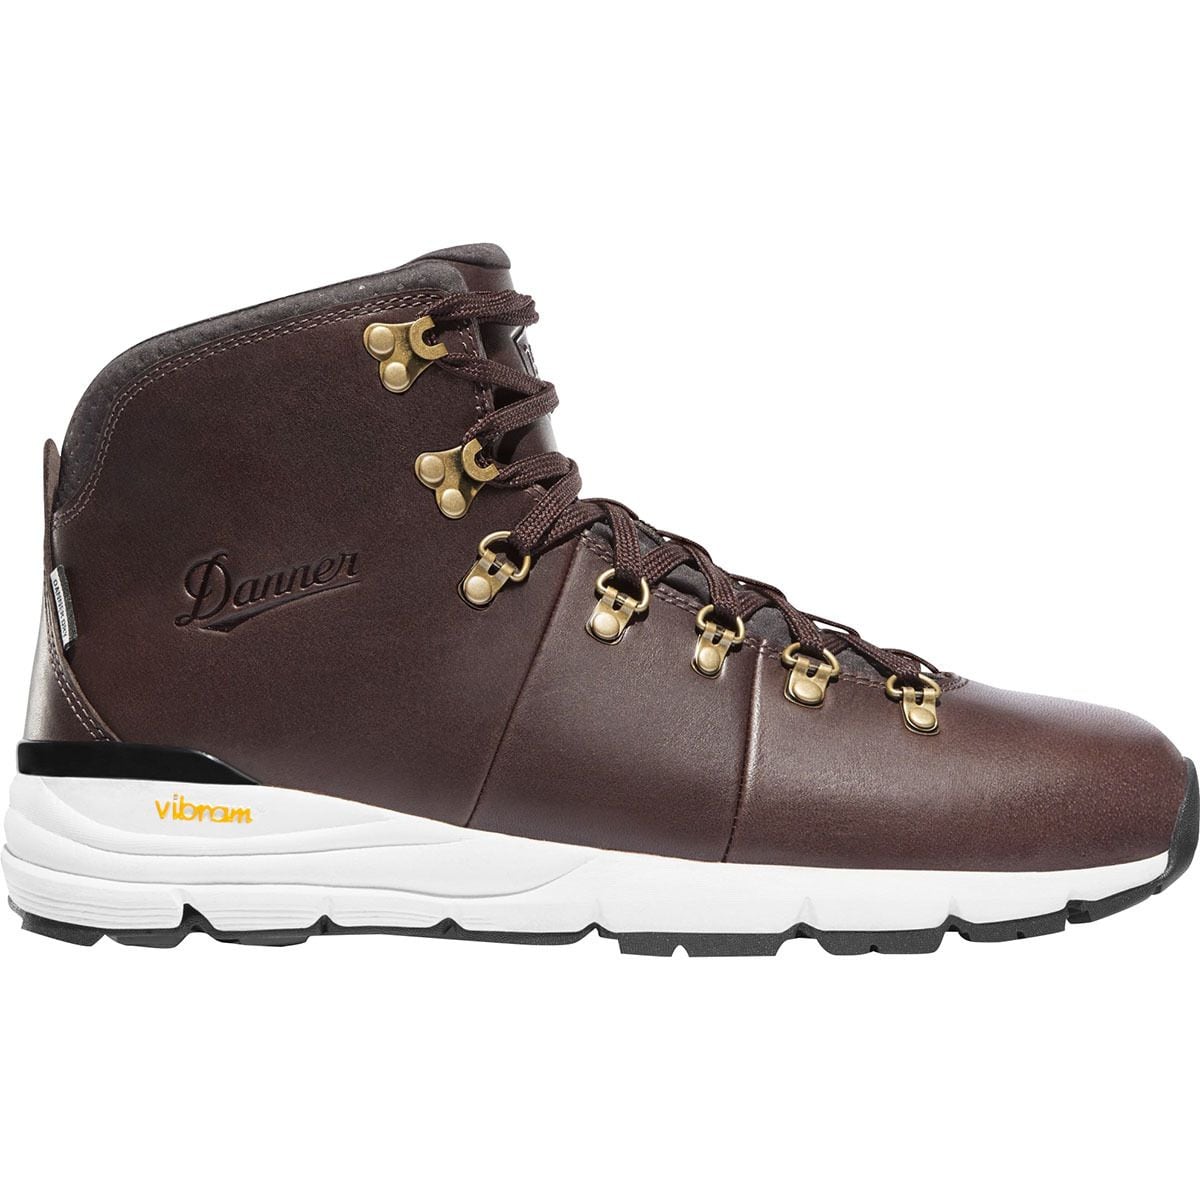 Mountain 600 Full-Grain Leather Hiking Boot - Men